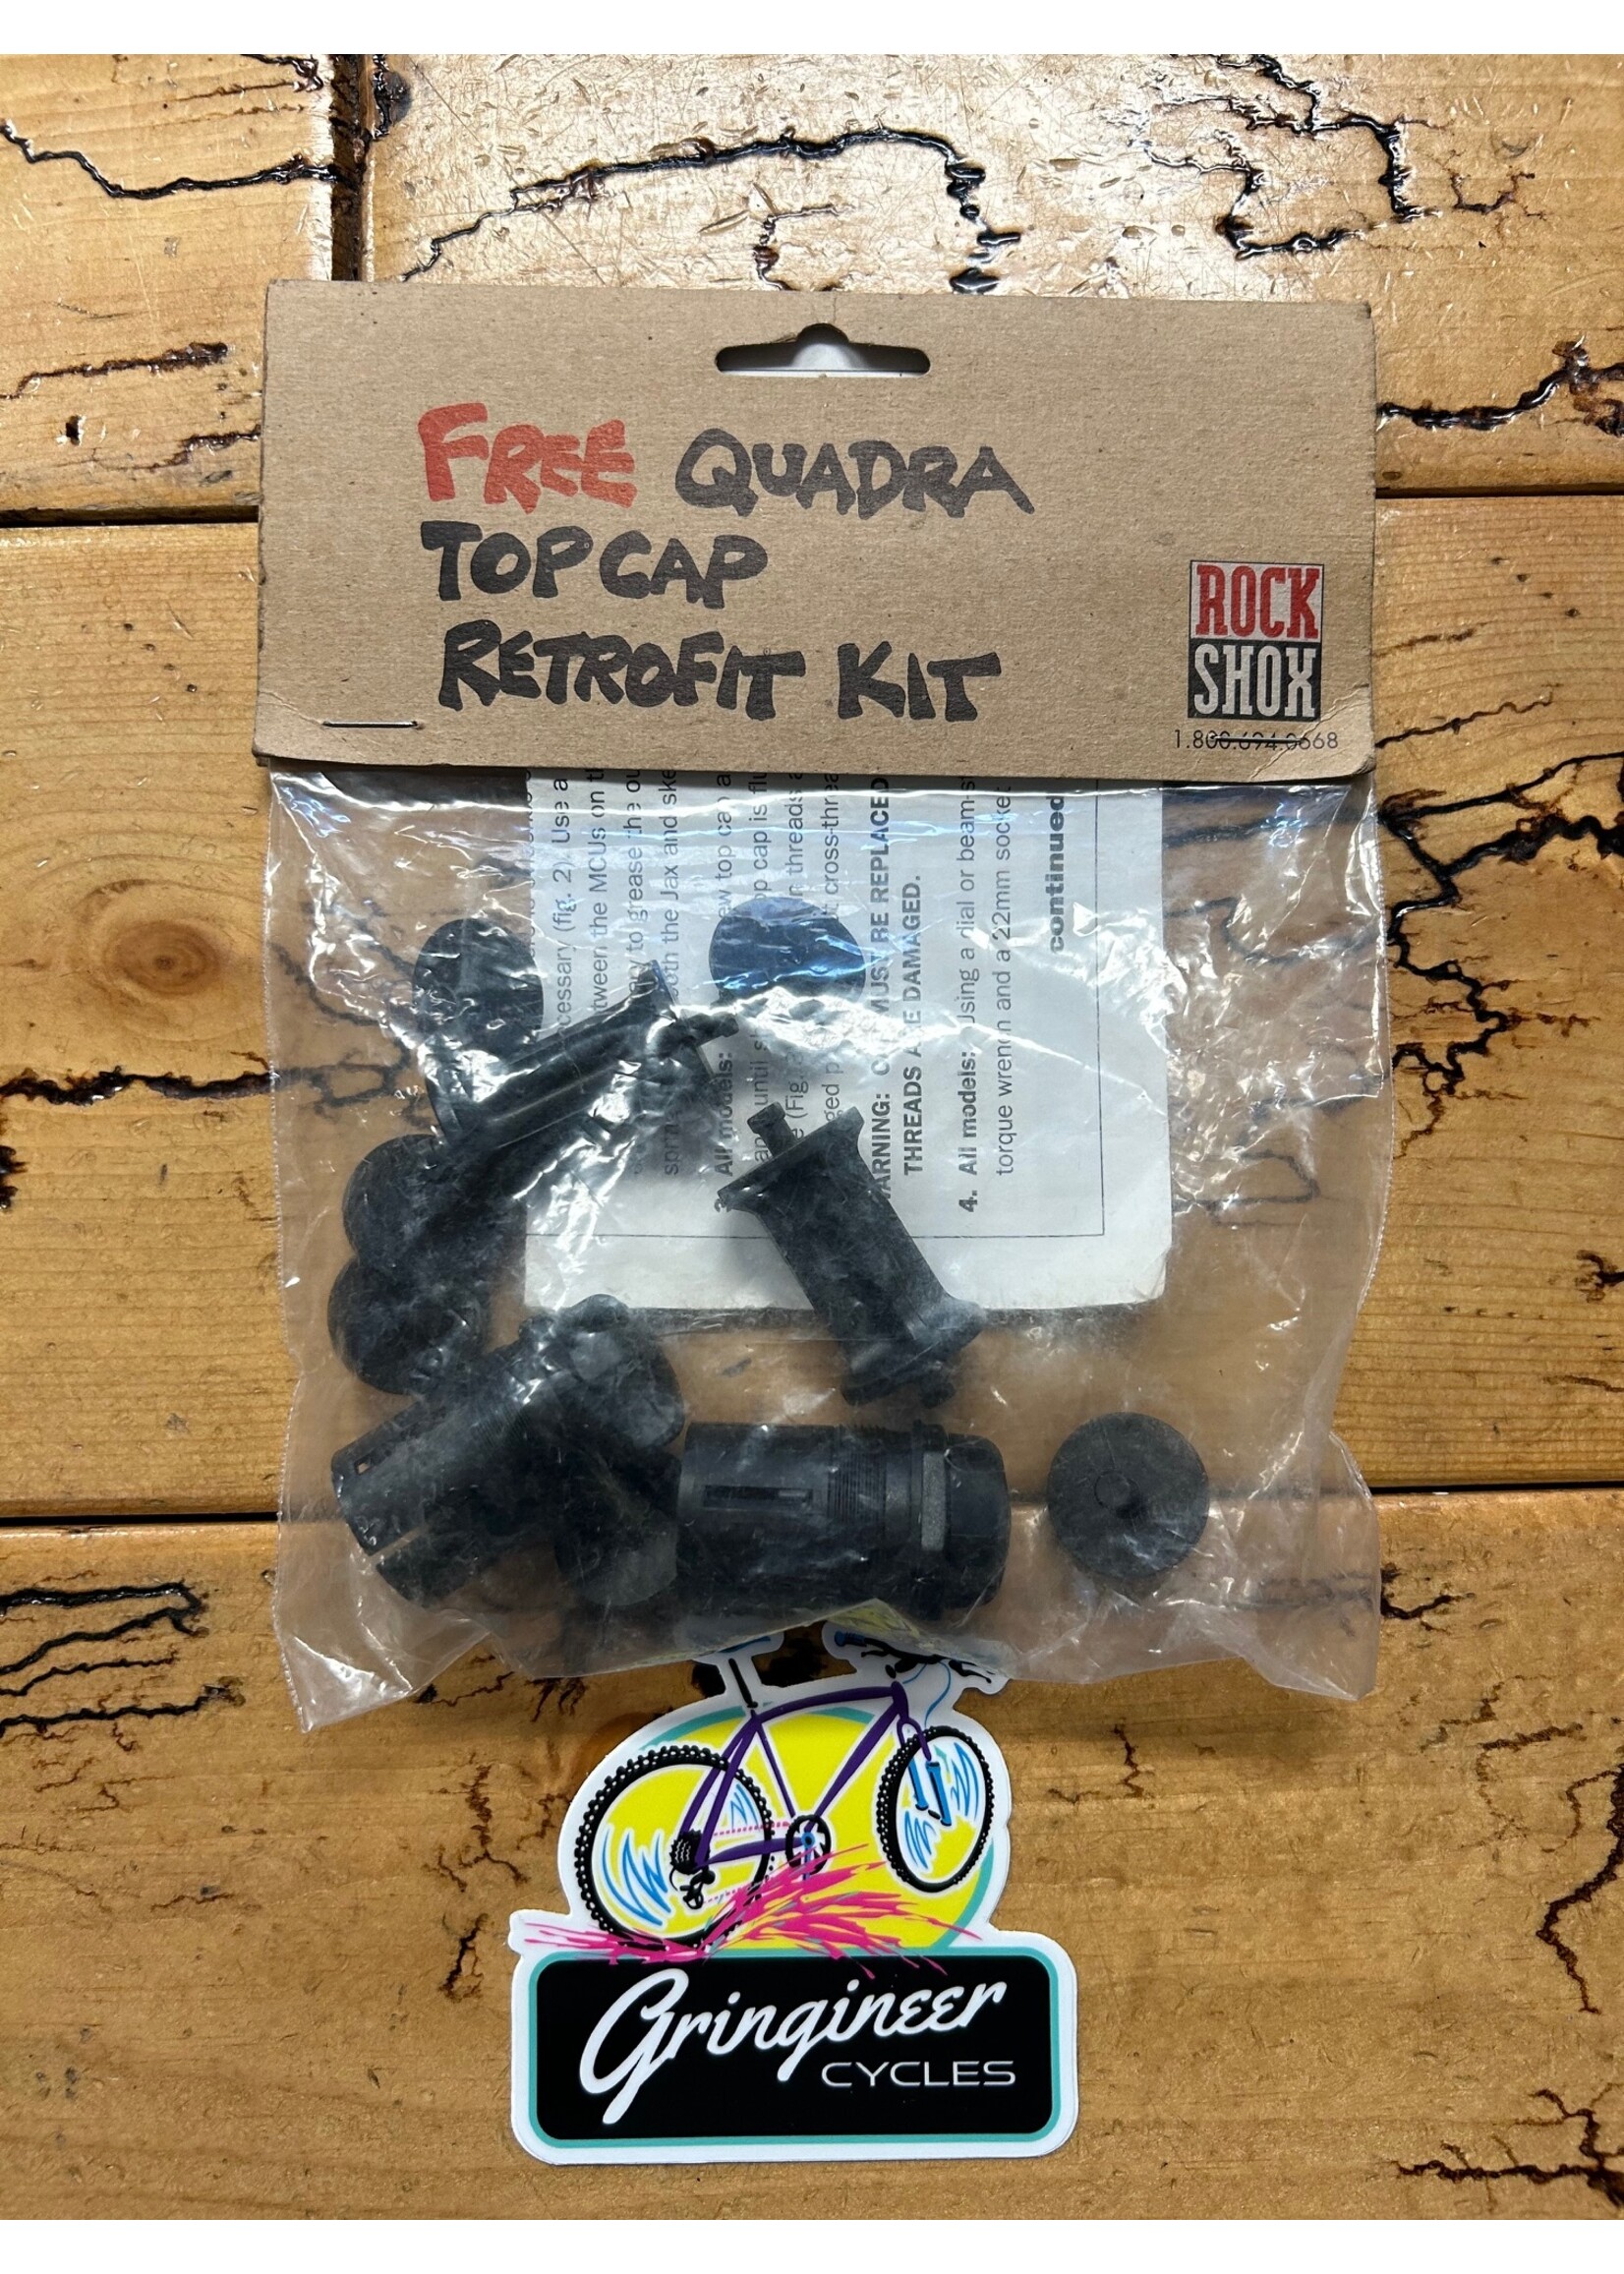 Rockshox Rockshox Quadra 21R Top Cap Retrofit Kit NOS